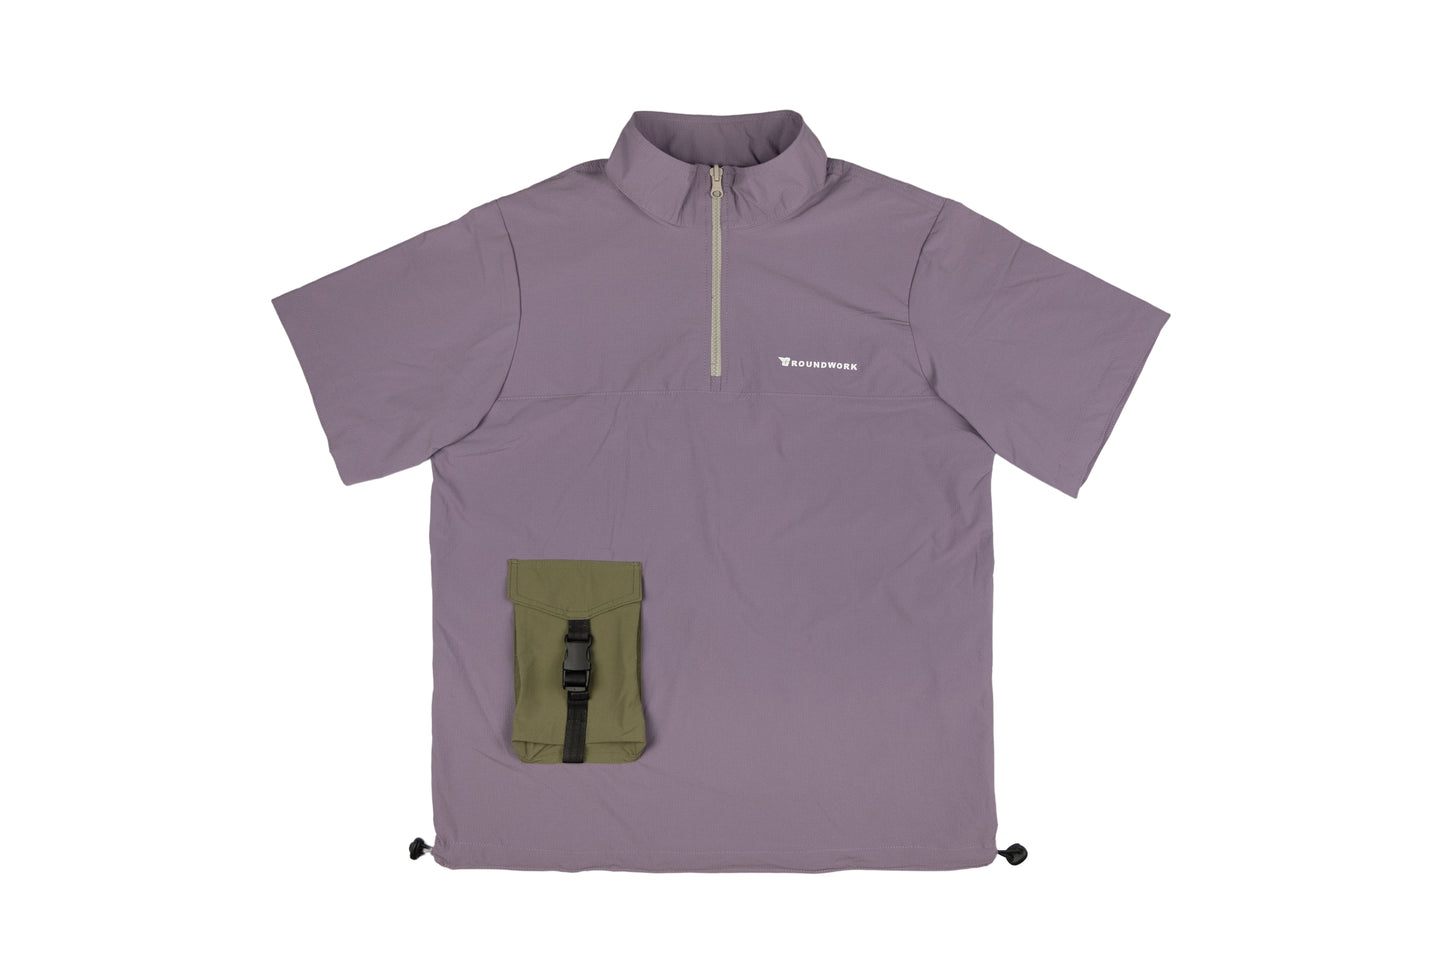 GW Quarter ziped Trail Shirt (Cyber Grape)